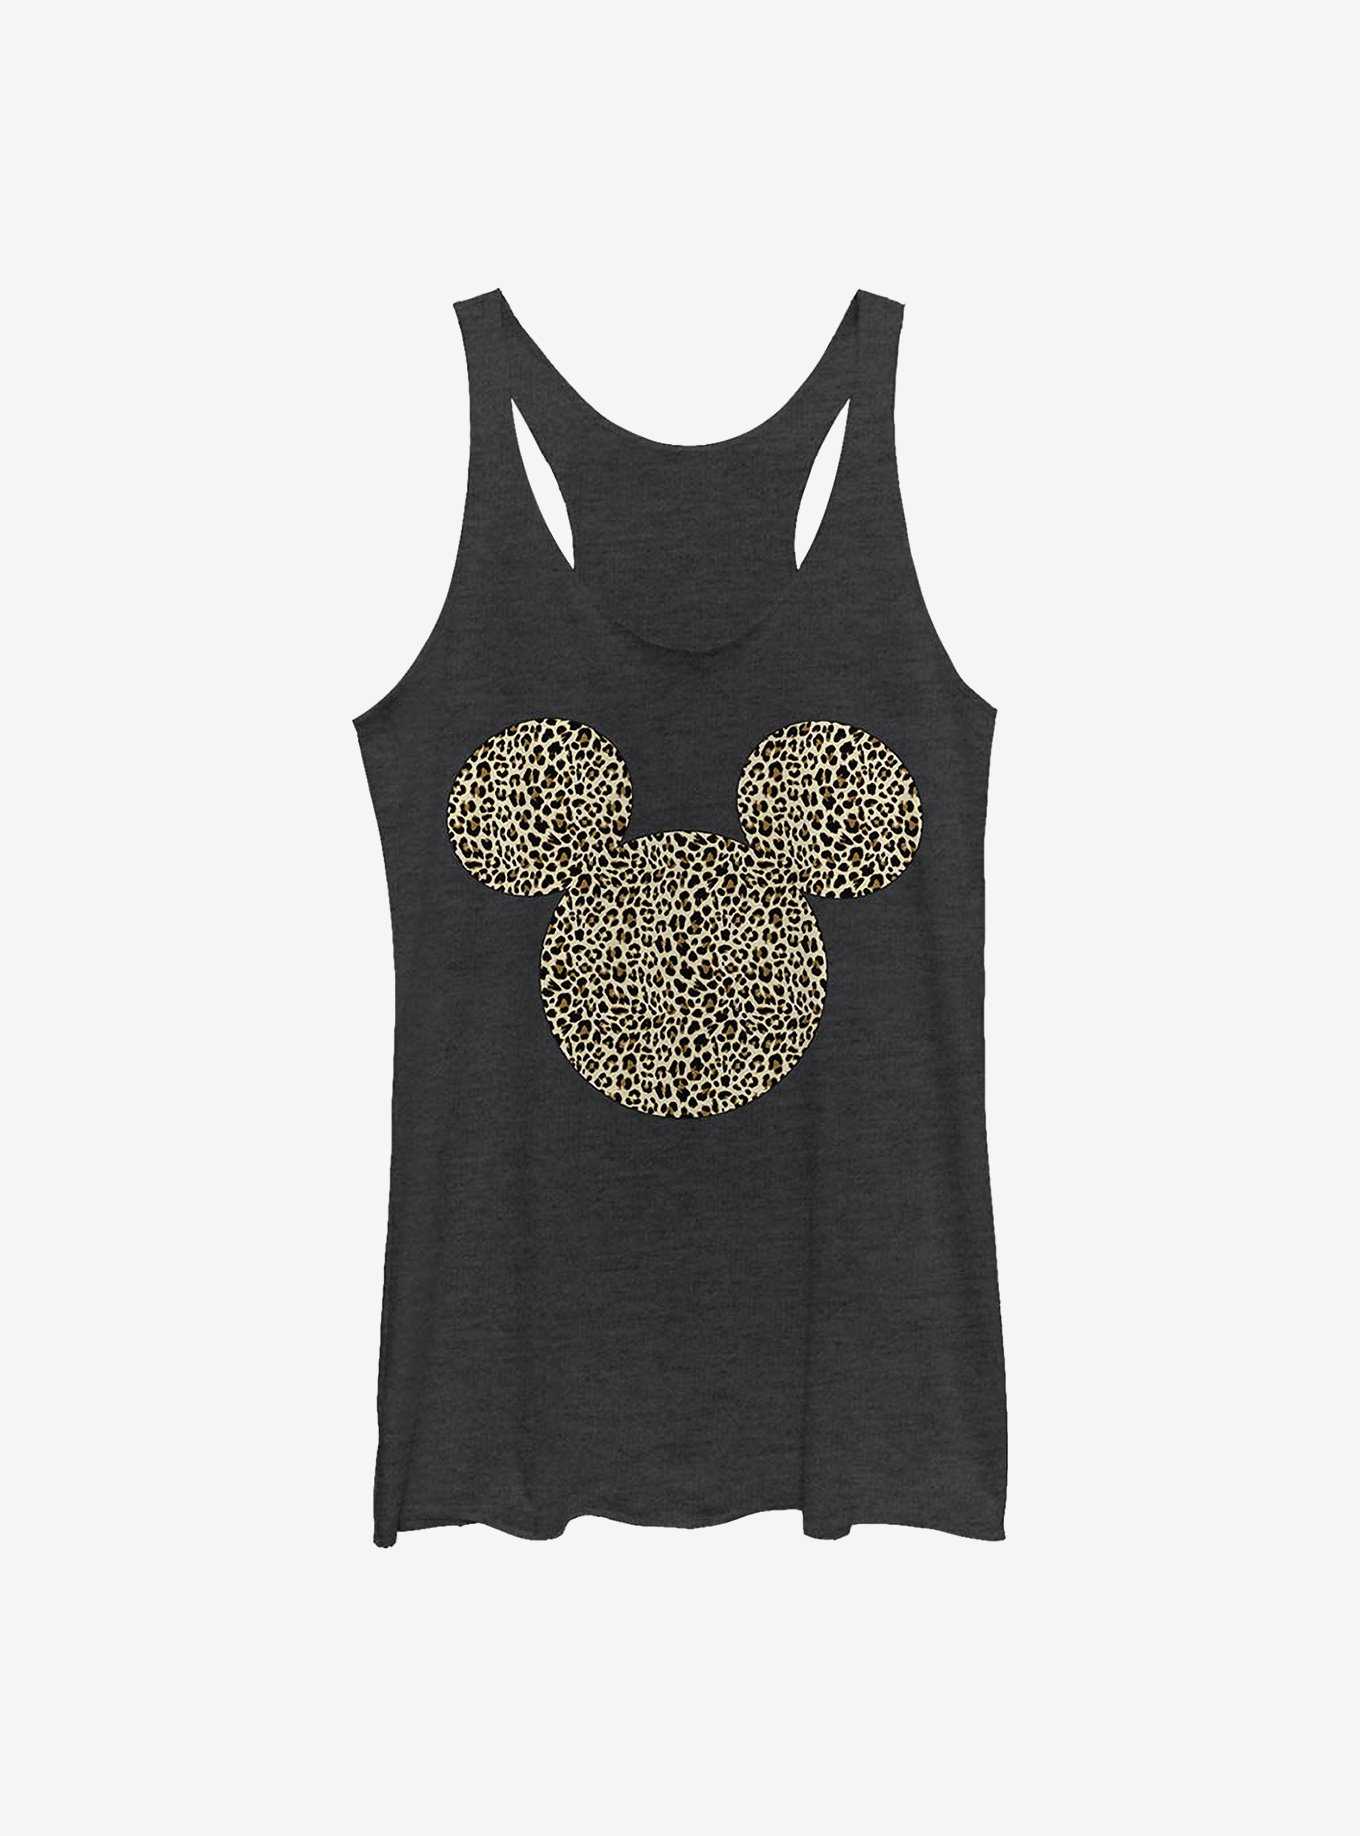 Disney Mickey Mouse Animal Ears Girls Tank, , hi-res